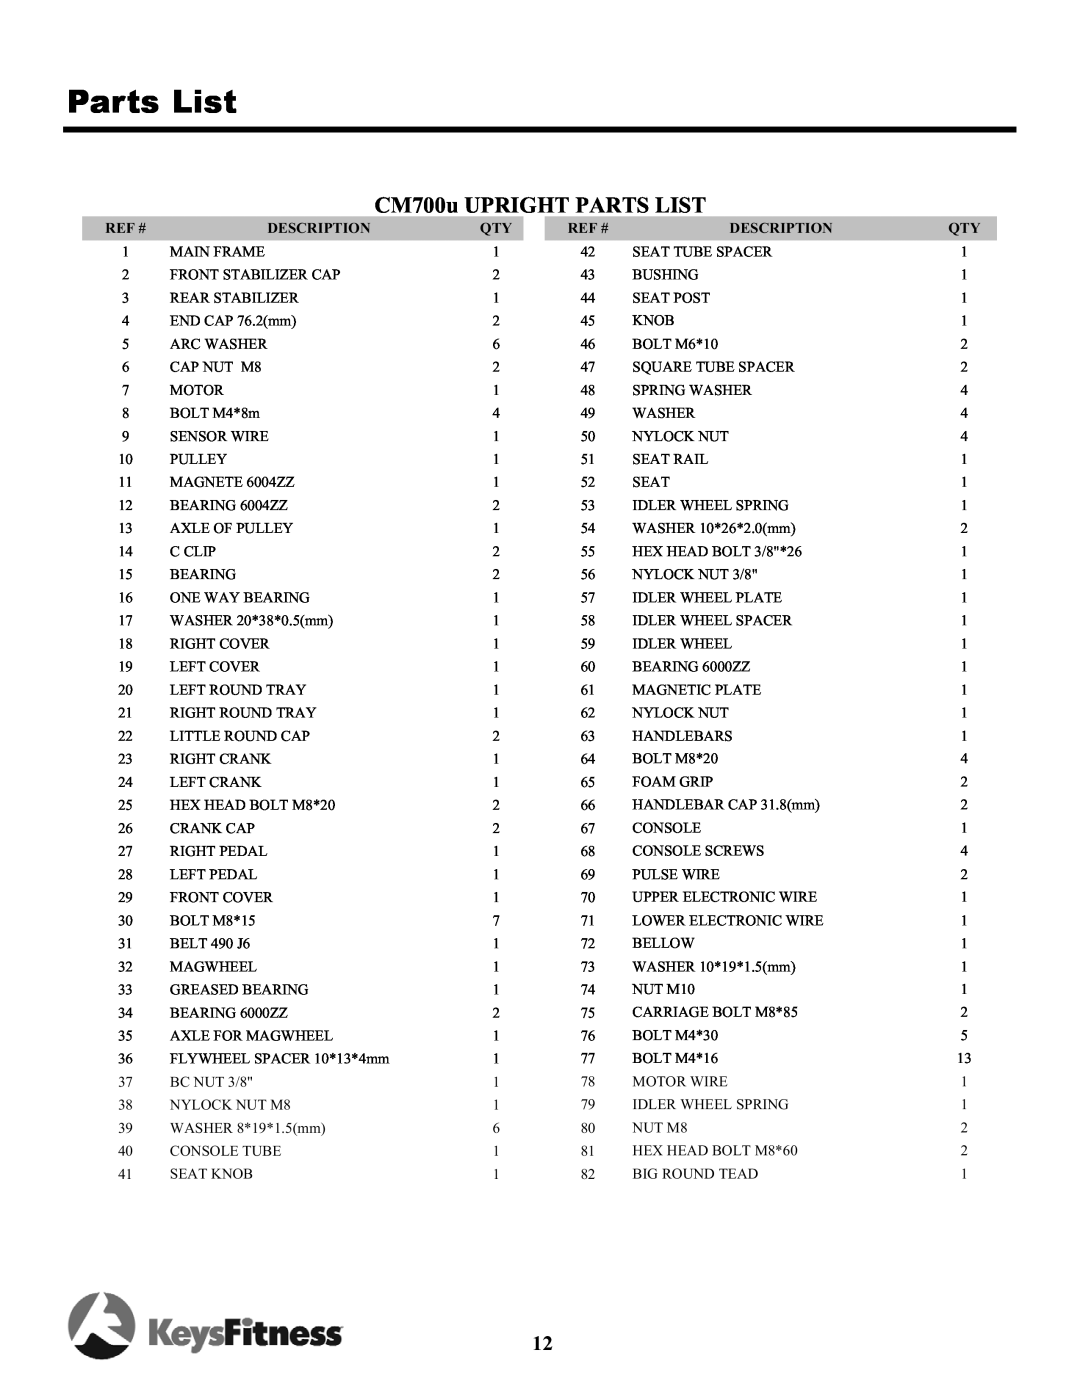 Keys Fitness owner manual Parts List, CM700u UPRIGHT PARTS LIST, Ref #, Description 